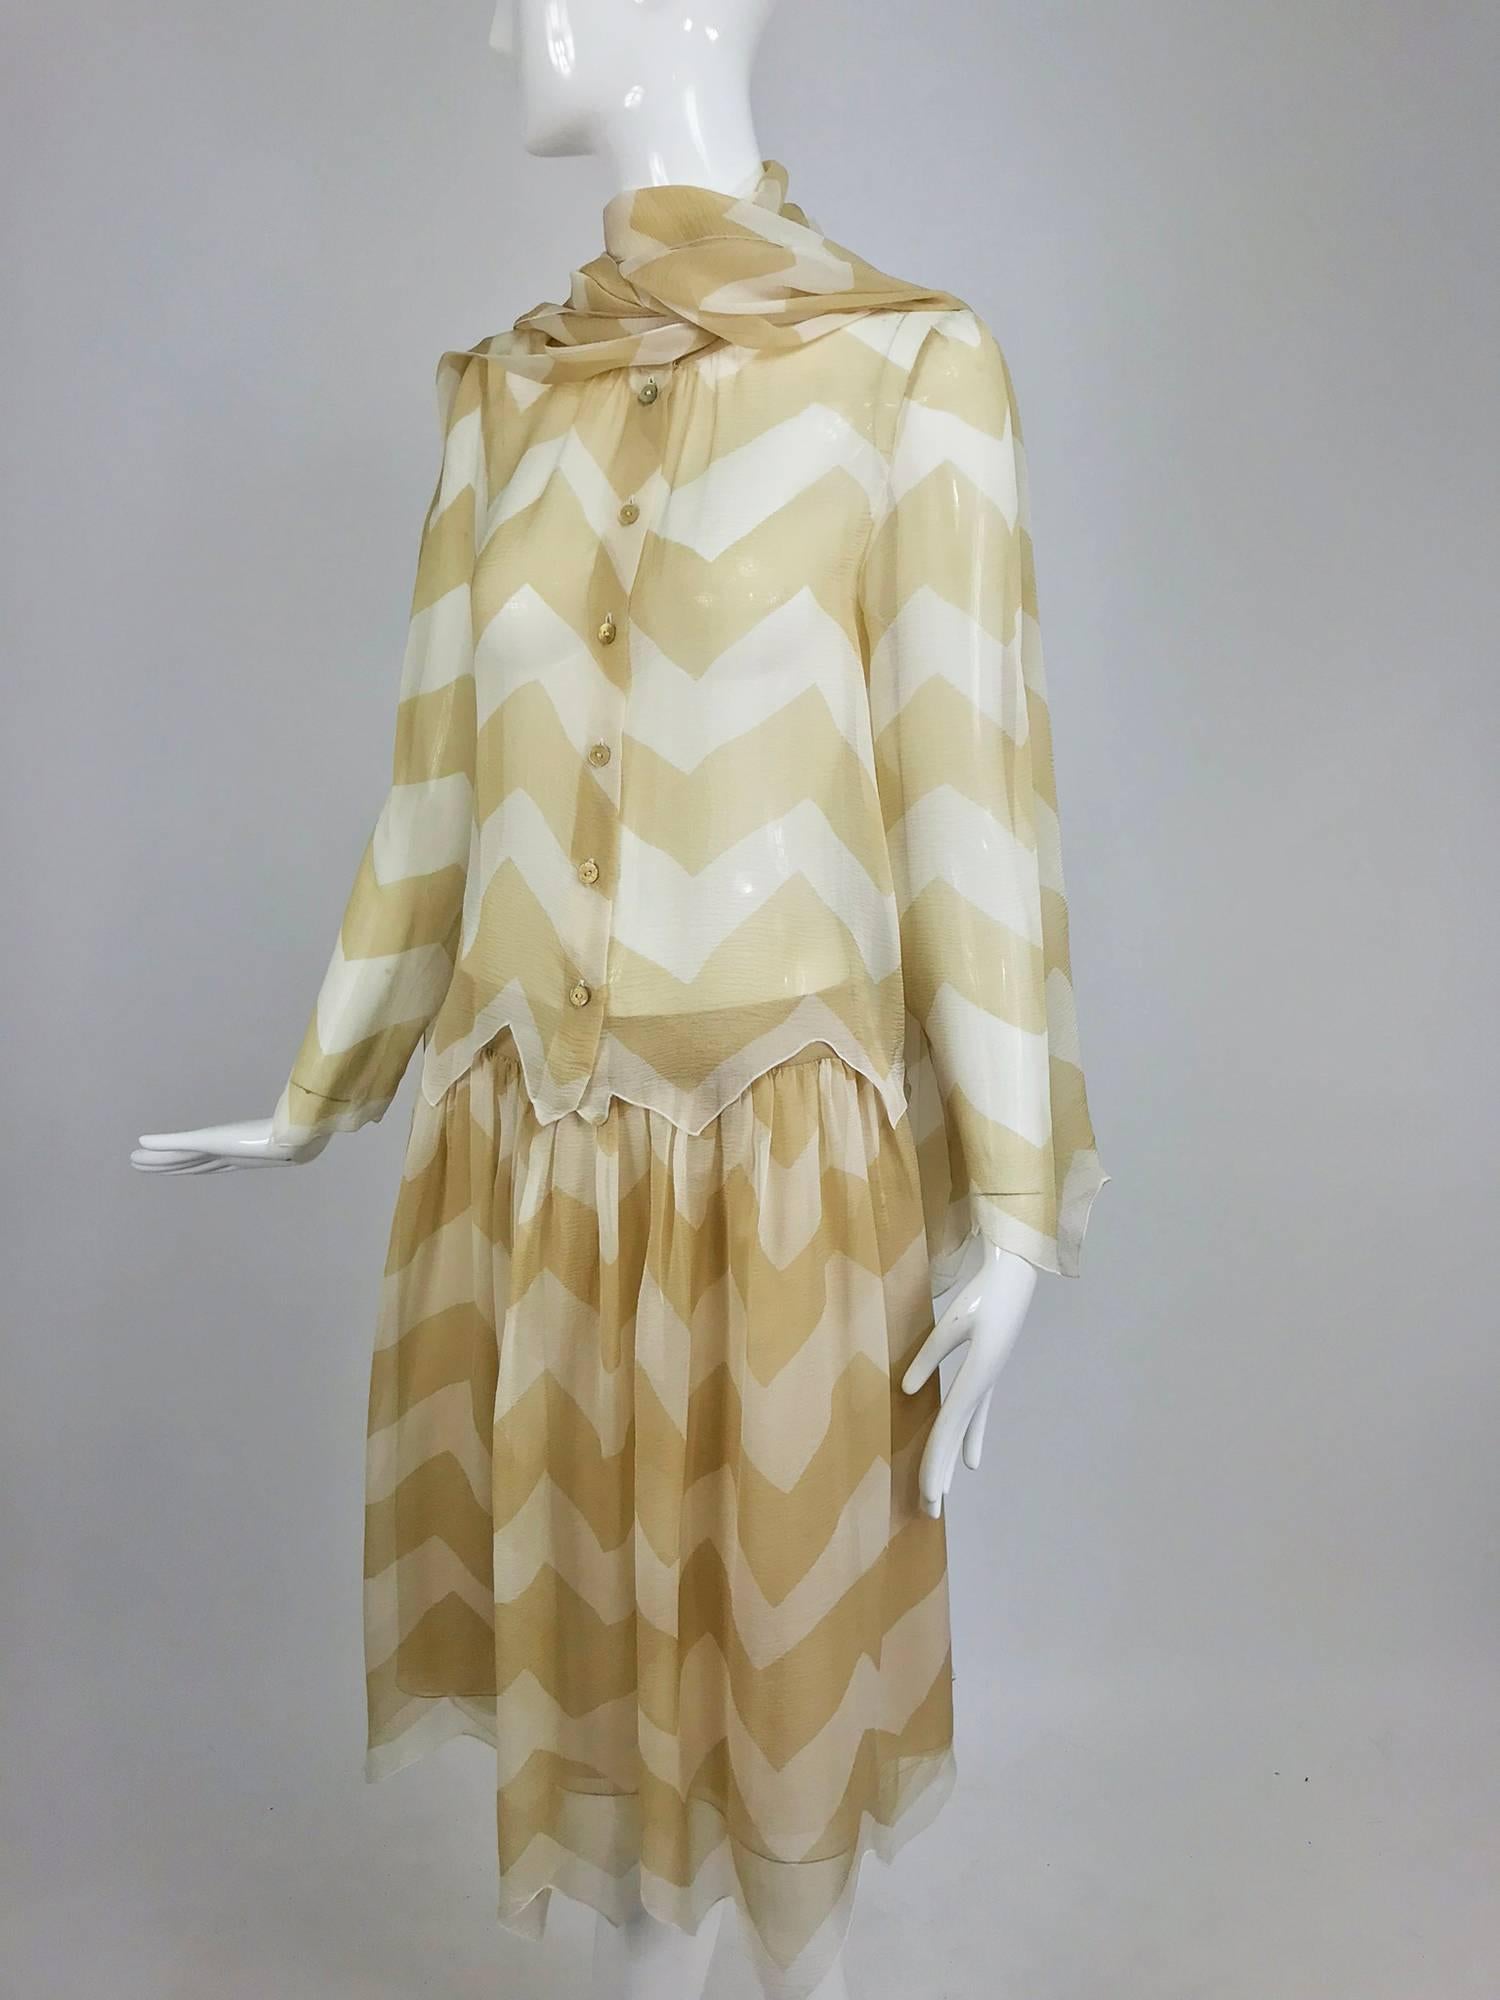 Chanel tan and cream zig zag silk chiffon blouse and skirt 2000A 7